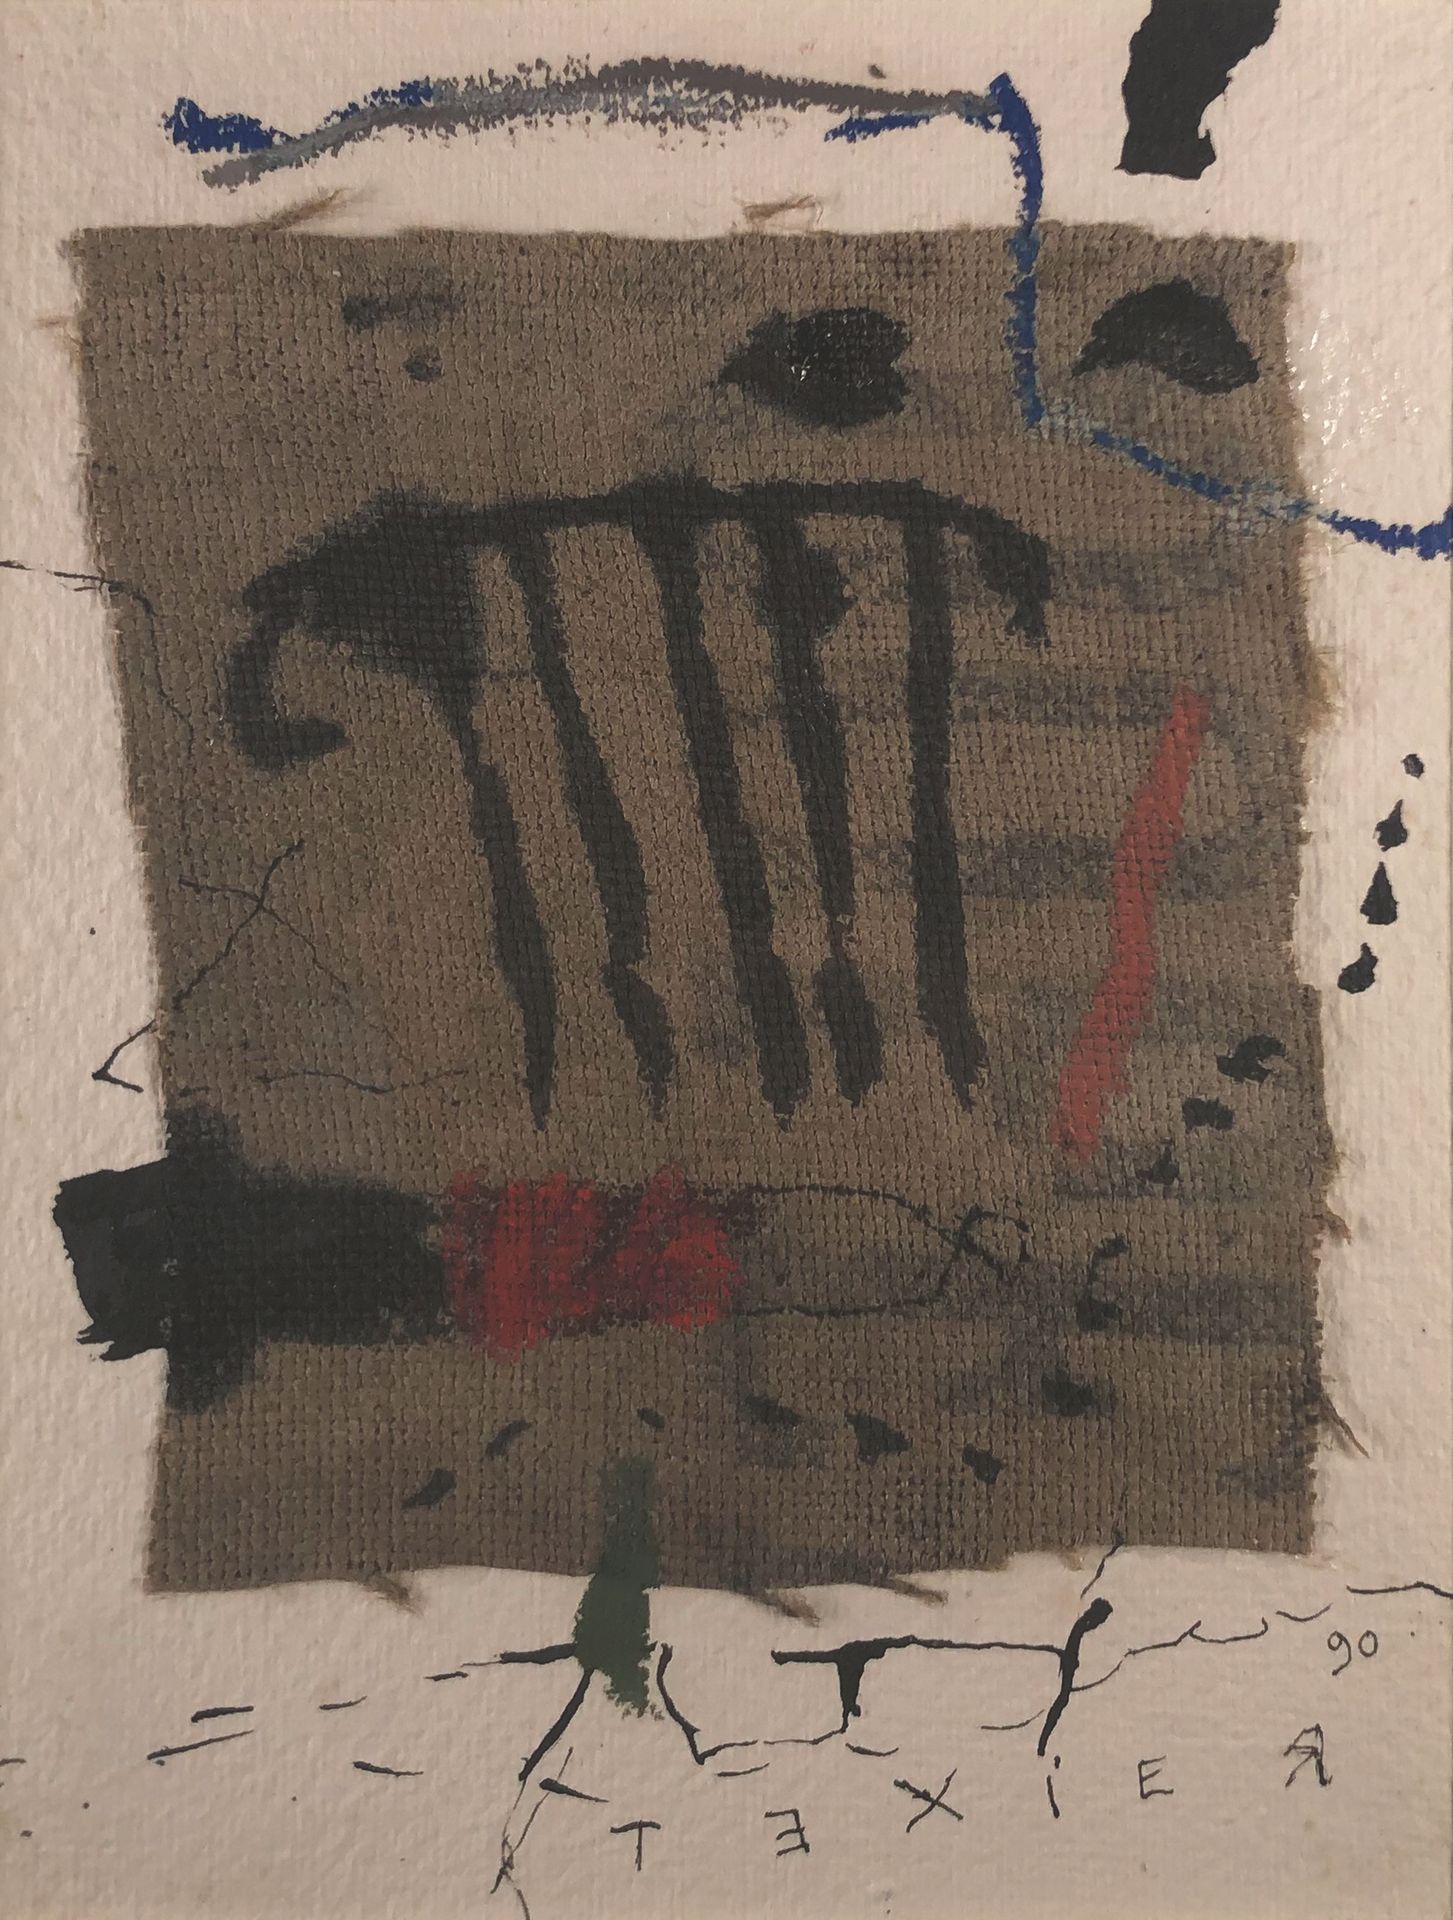 Null Richard TEXIER (生于1955年)

抽象构成, 1996.

混合媒体，右下角有签名和日期。

22,5 x 16,5 cm